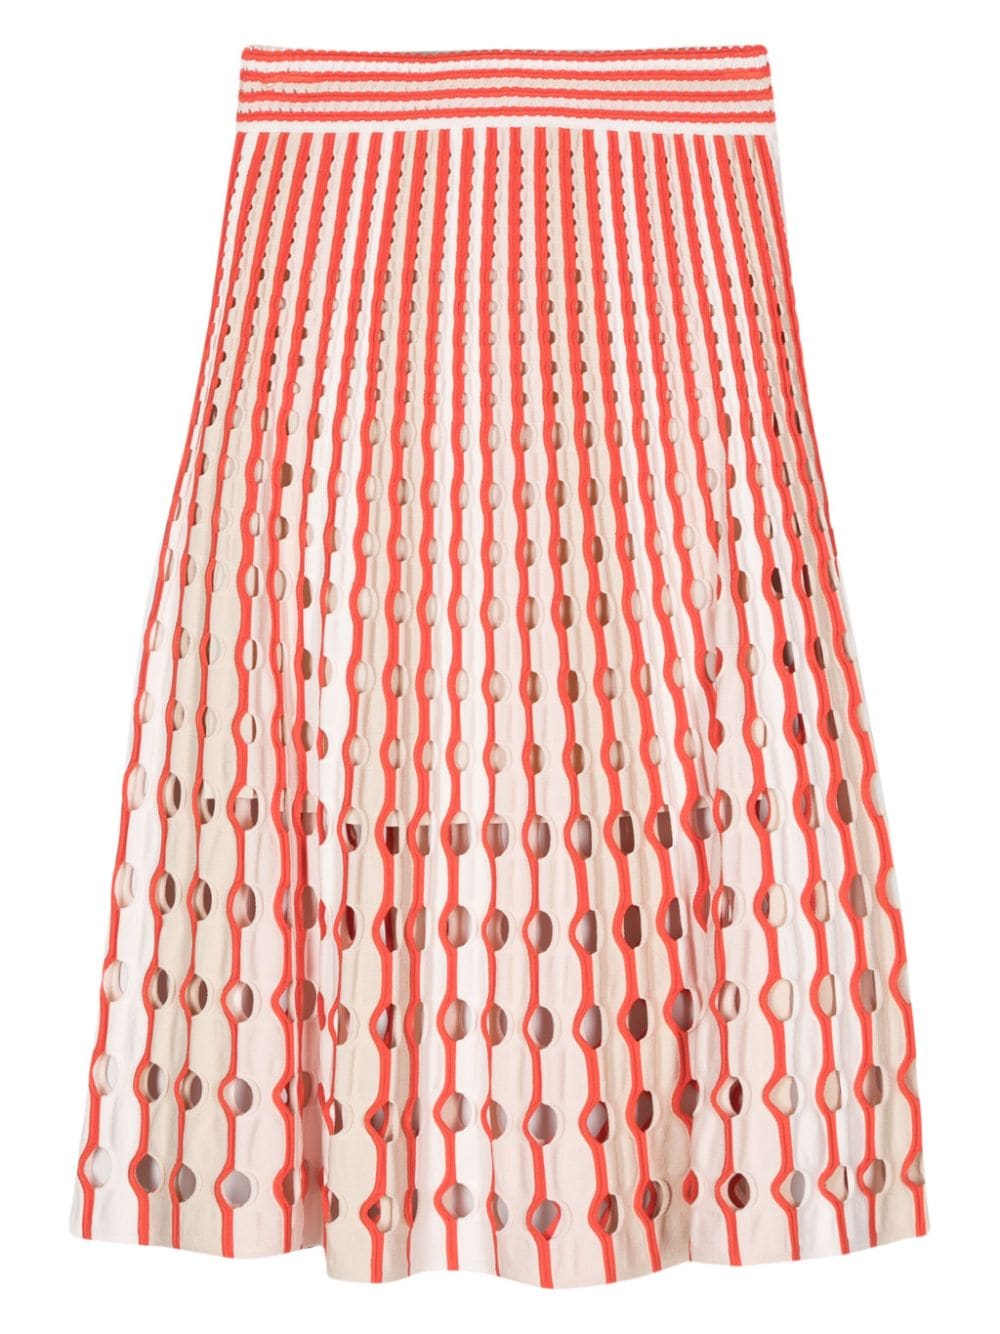 Simkhai Jax cut-out striped skirt - Beige